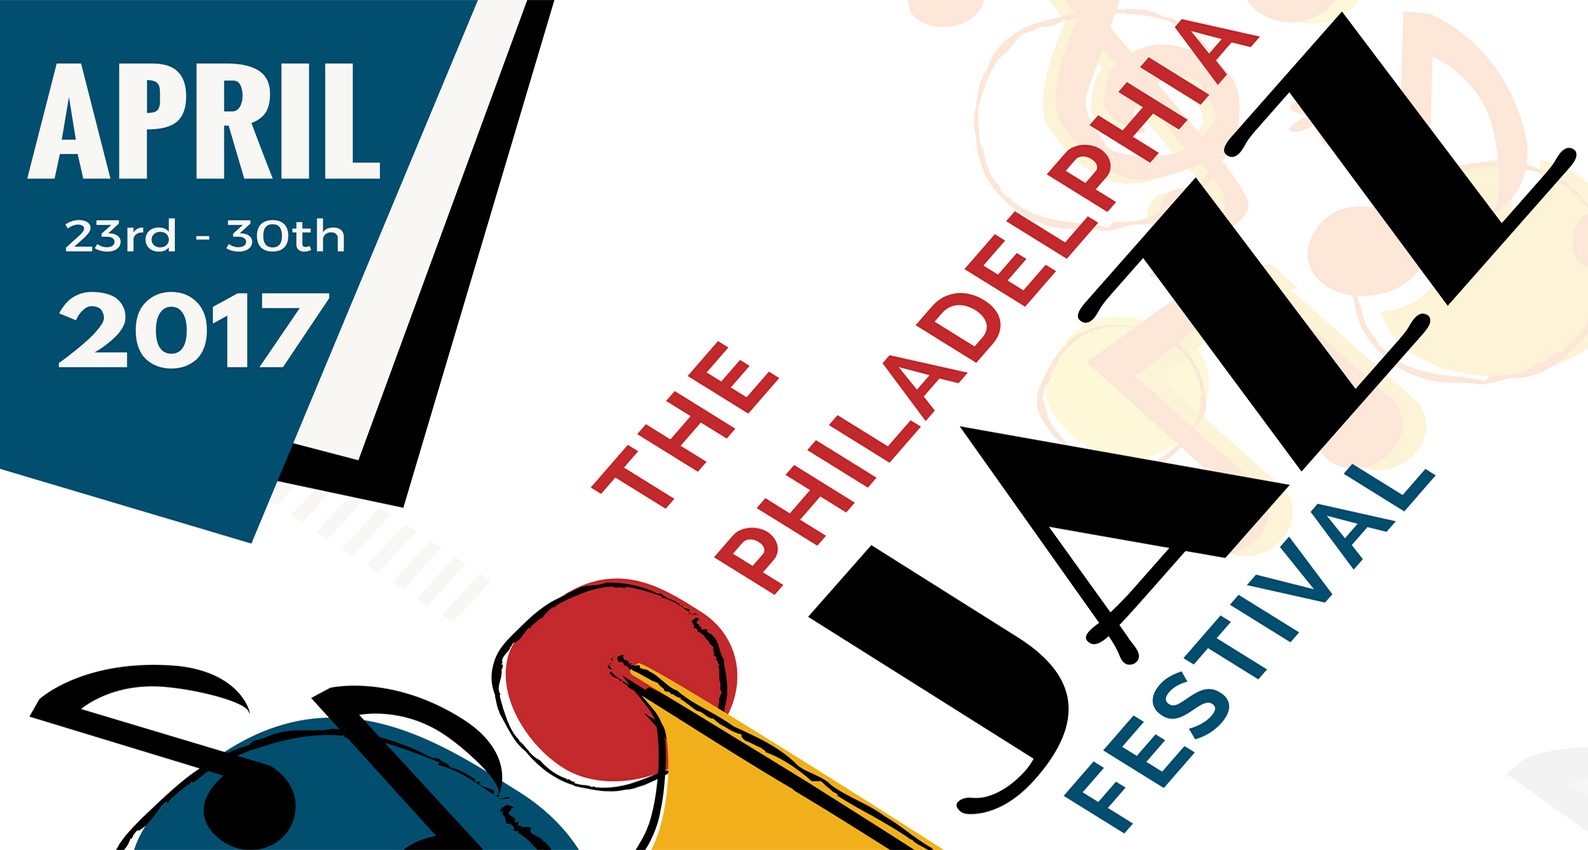 The Philadelphia Jazz Festival